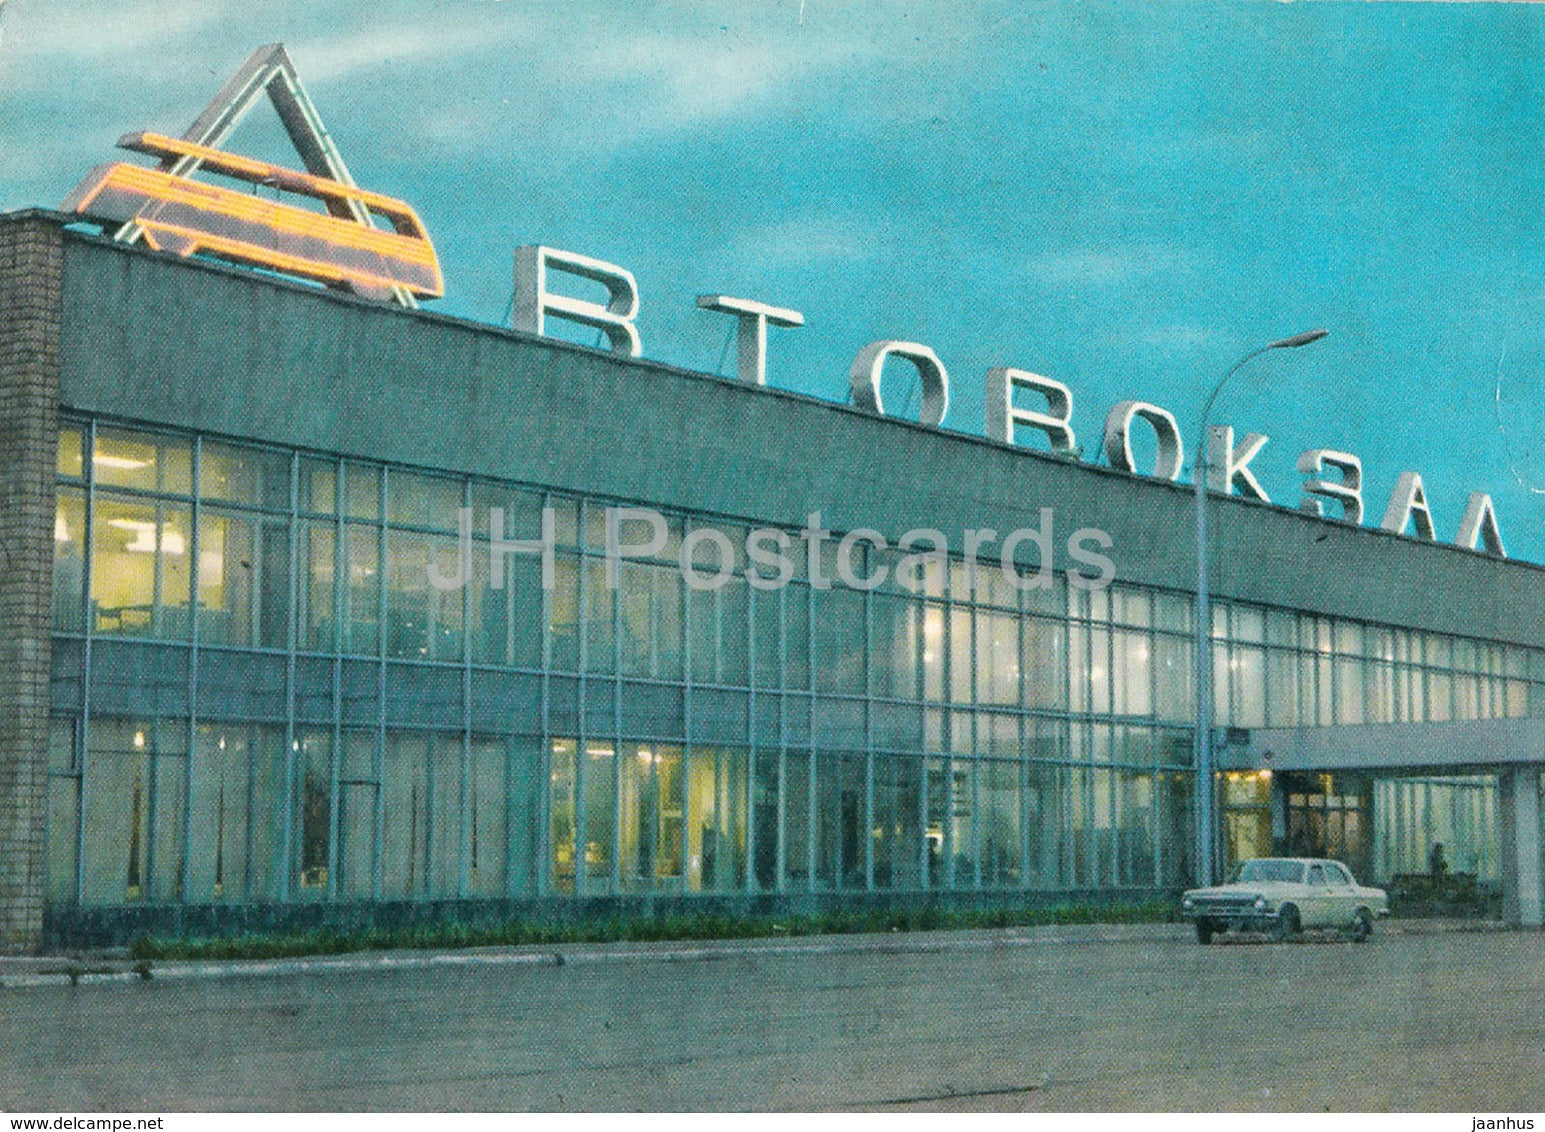 Ulyanovsk - Bus Station - car Volga - postal stationery - 1979 - Russia USSR - unused - JH Postcards